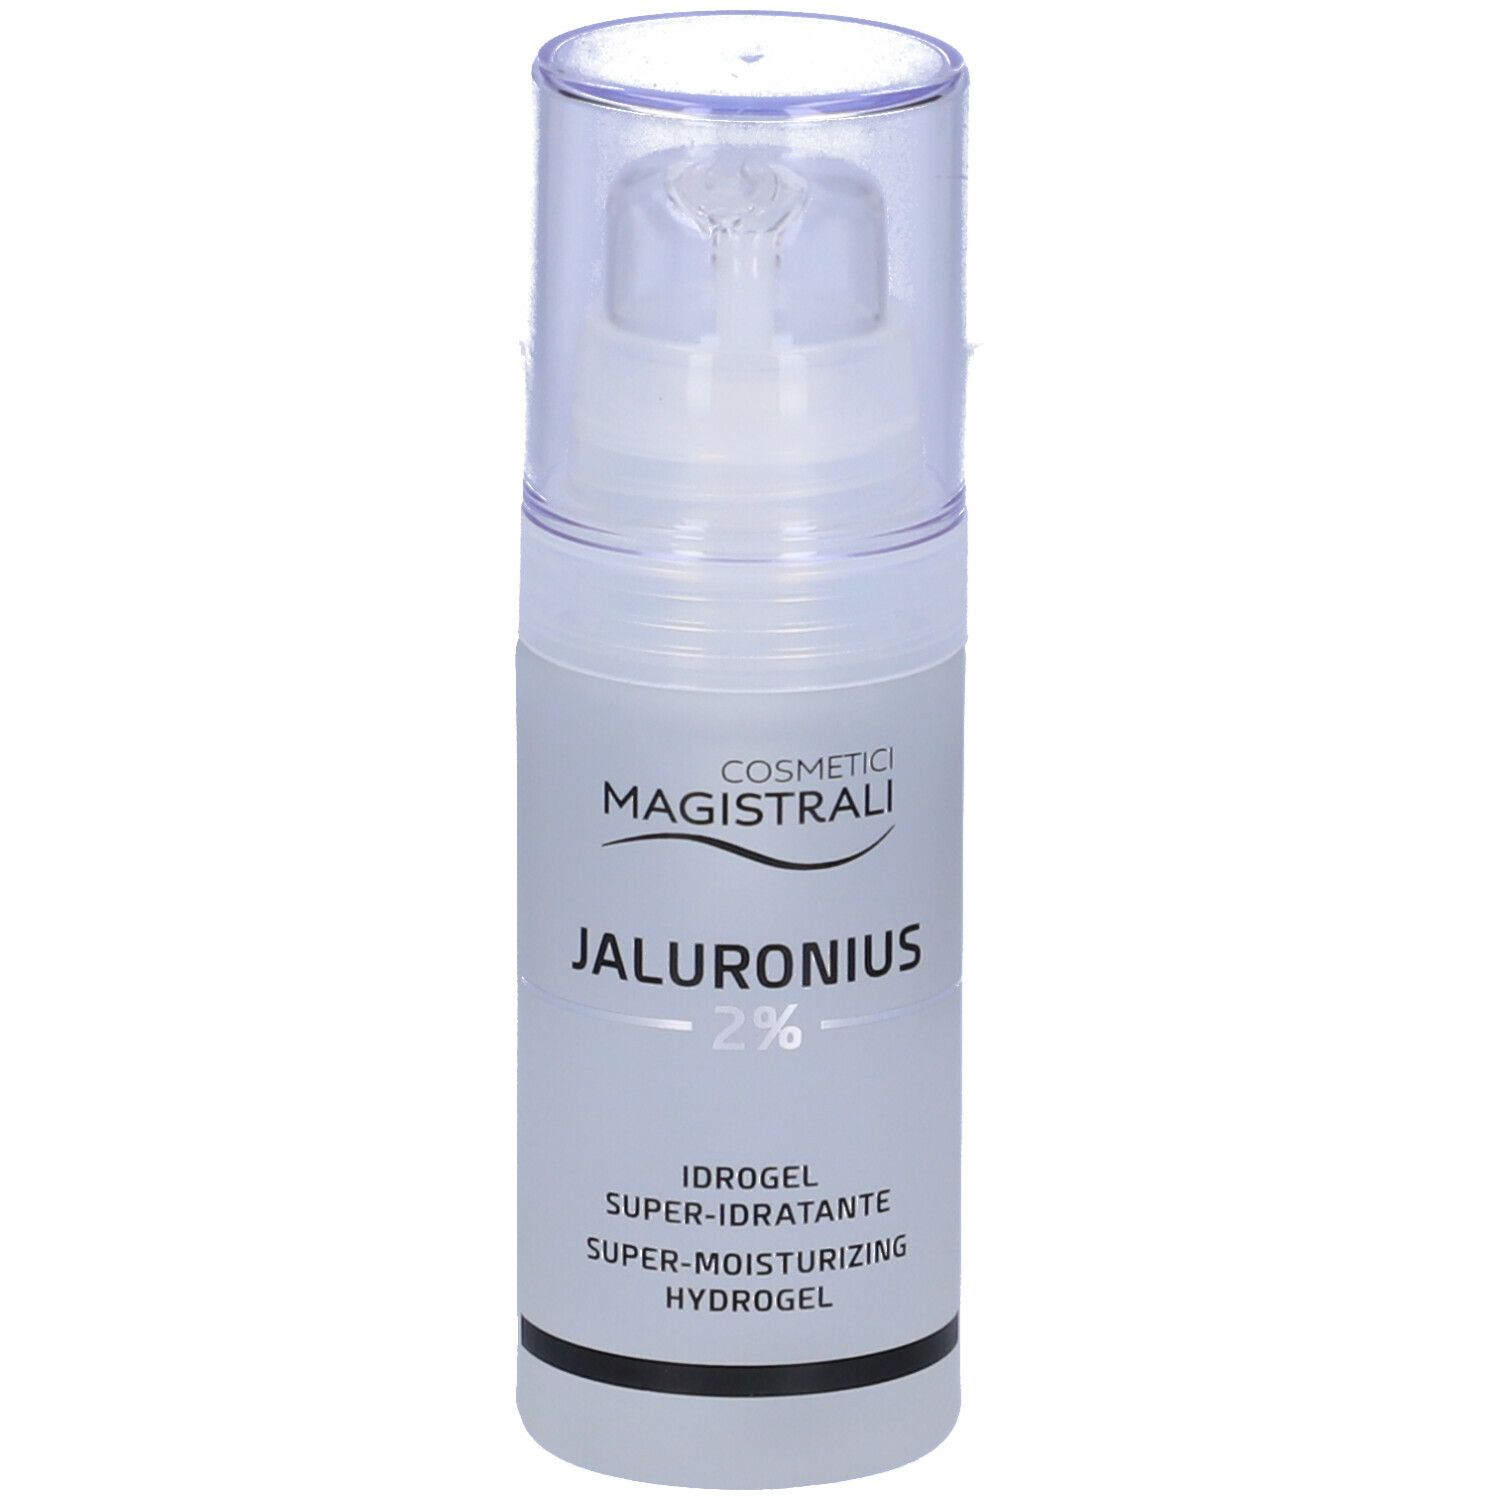 Cosmetici Magistrali Jaluronius 2% Idrogel Super Idratante 30ml